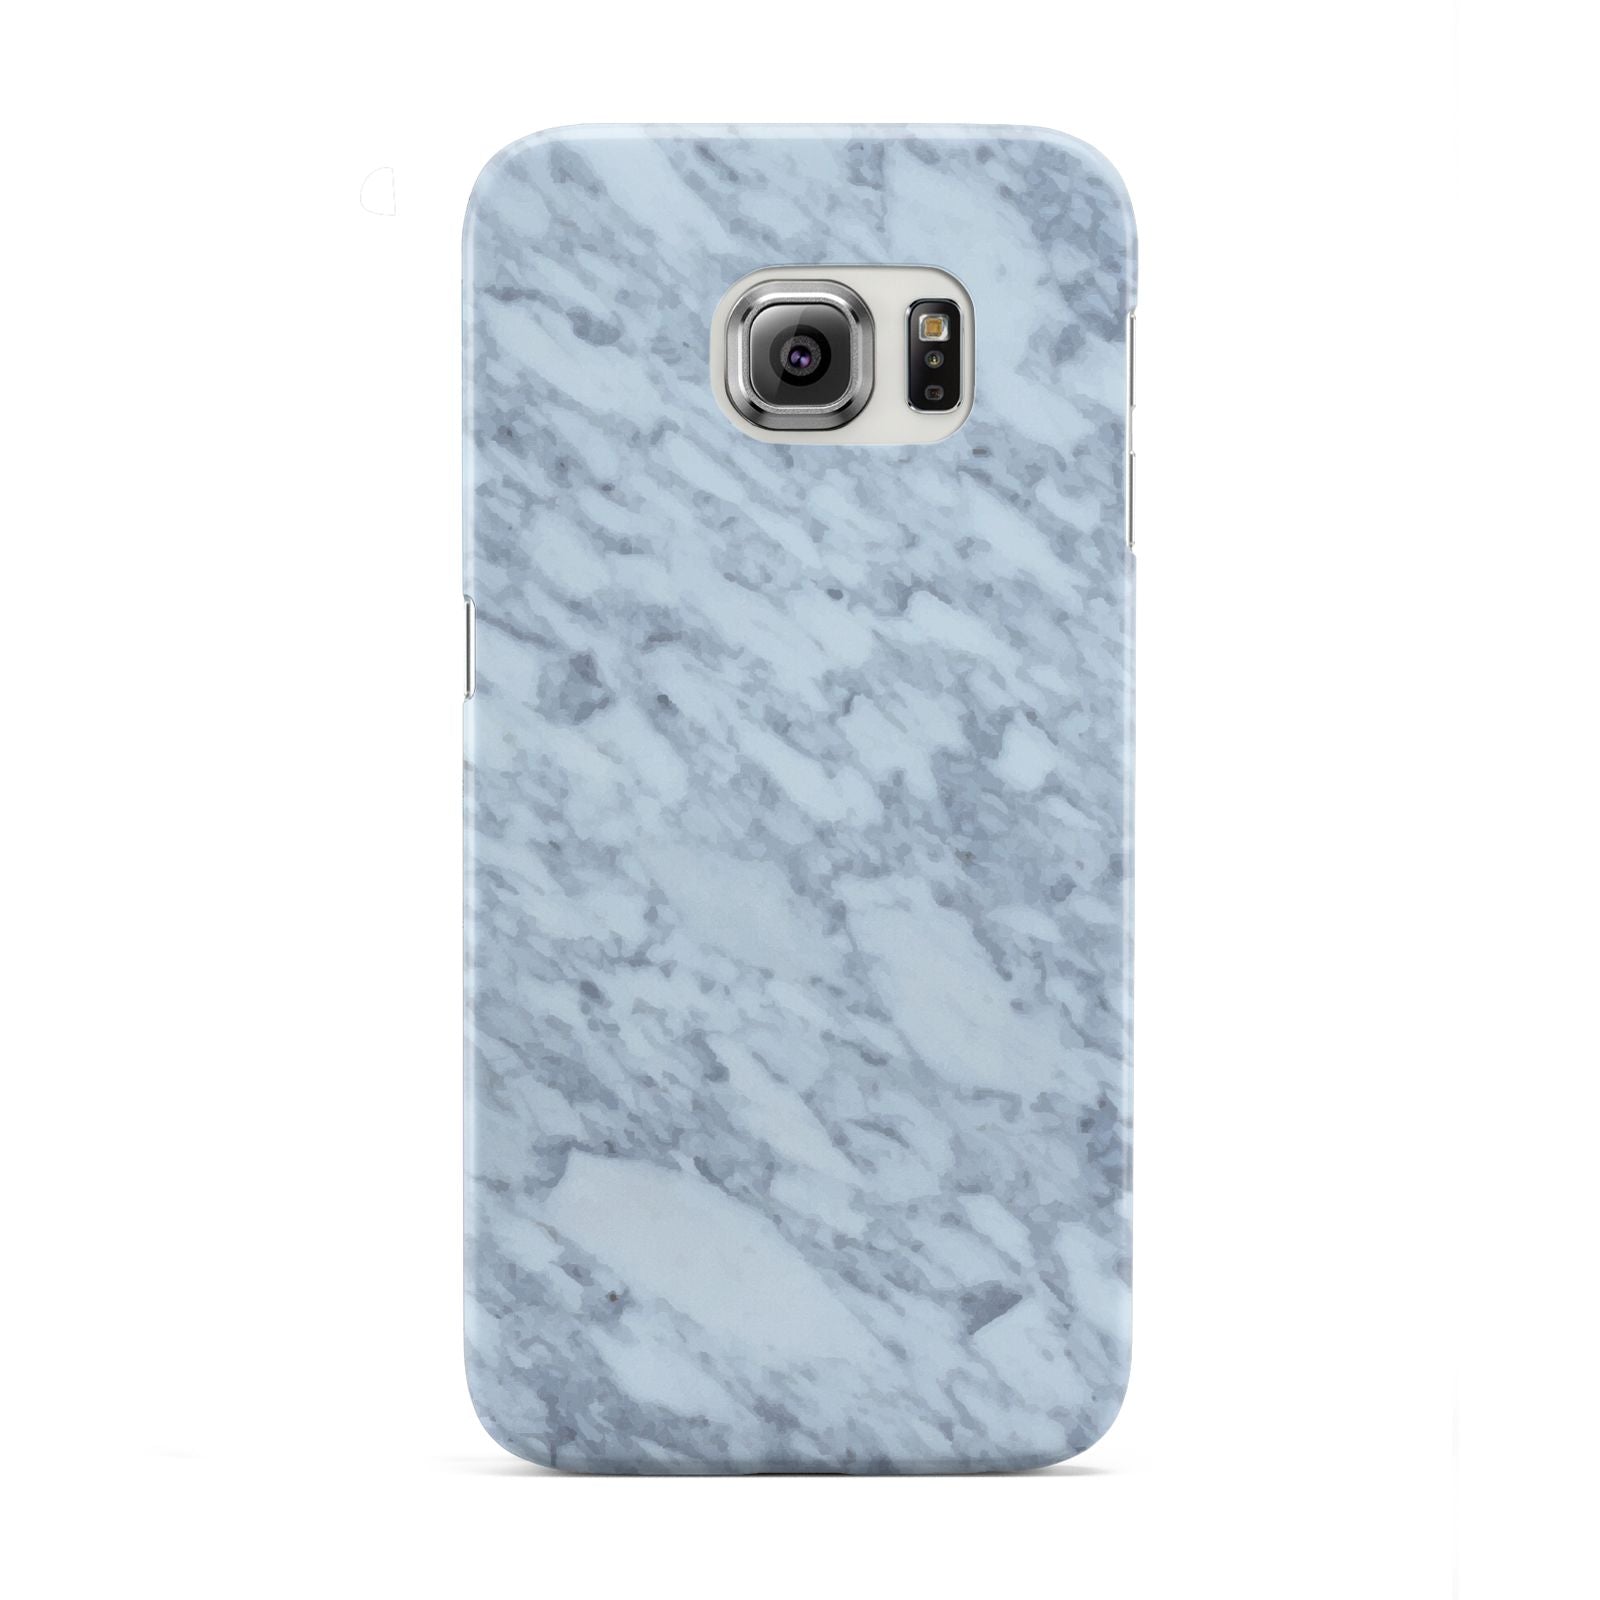 Faux Marble Grey 2 Samsung Galaxy S6 Edge Case